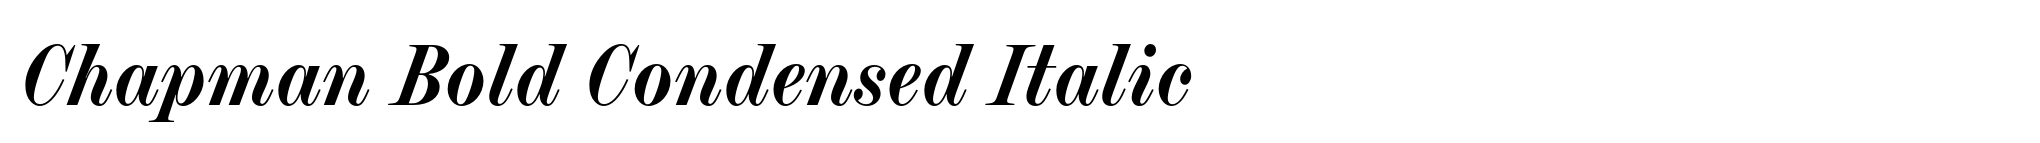 Chapman Bold Condensed Italic image